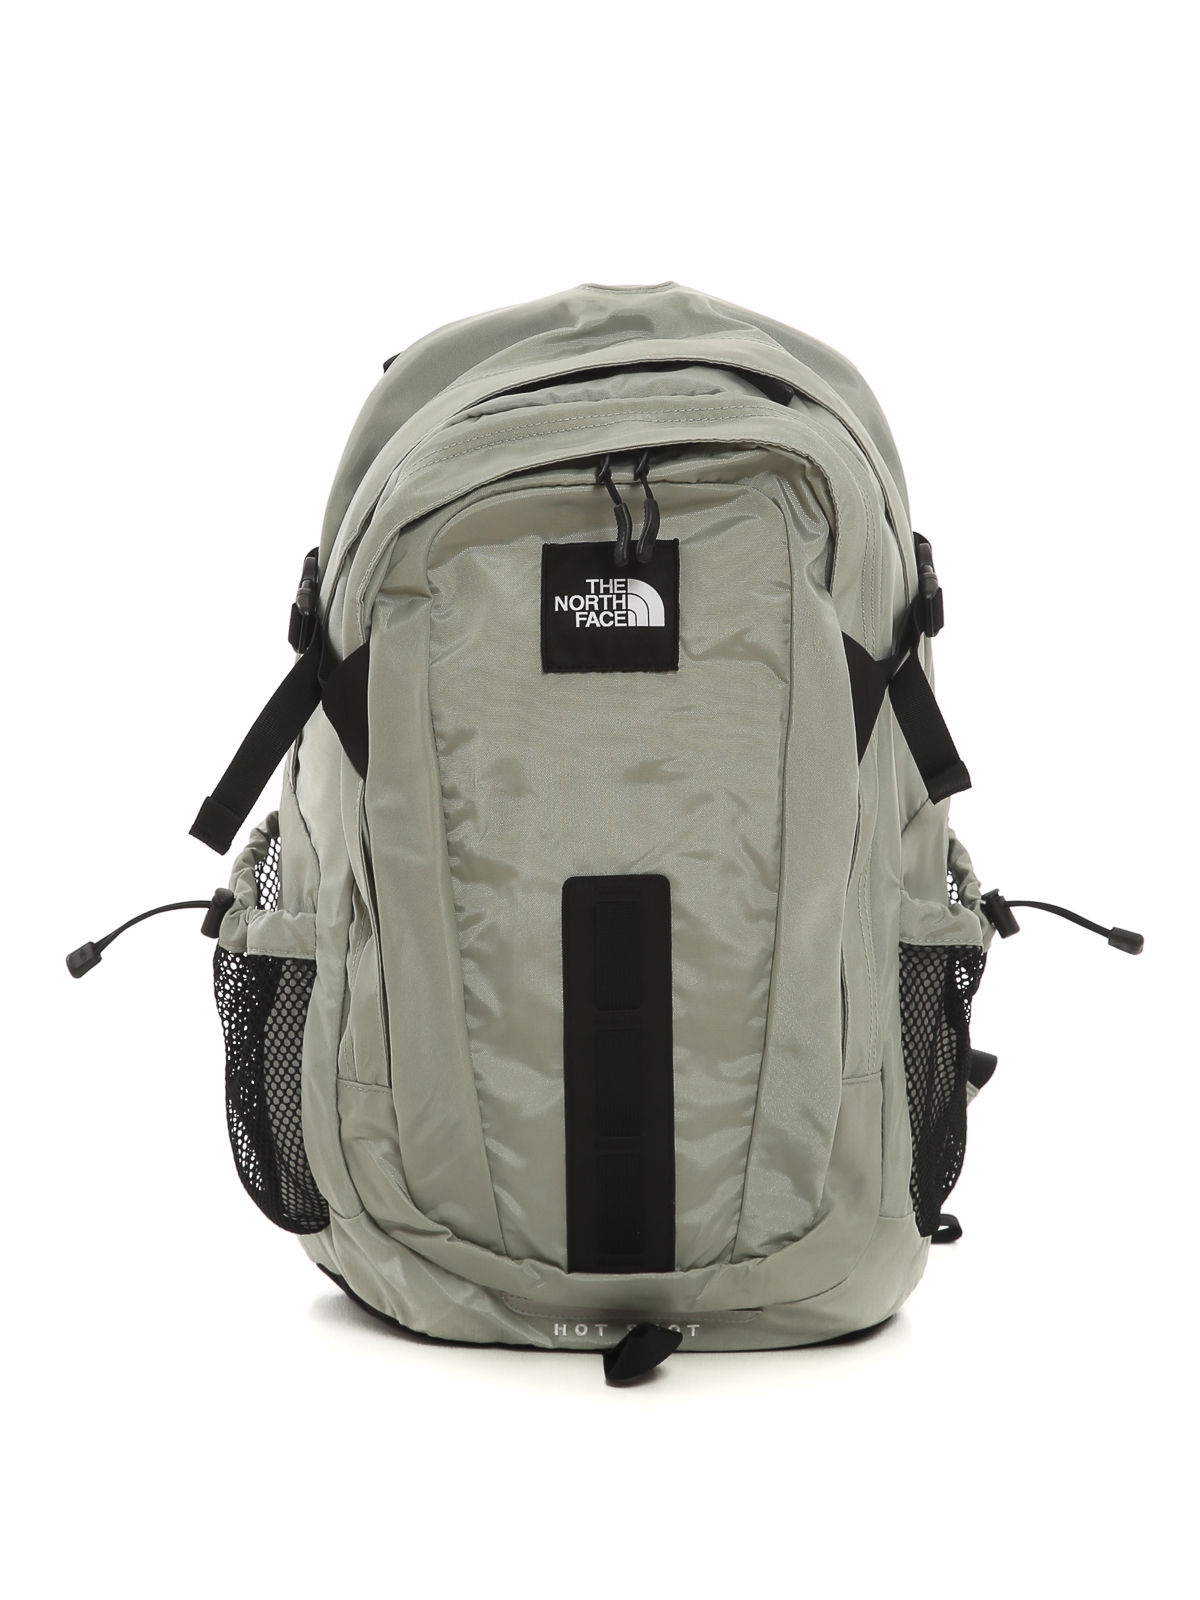 Backpacks The North Face - Hot Shot backpack -